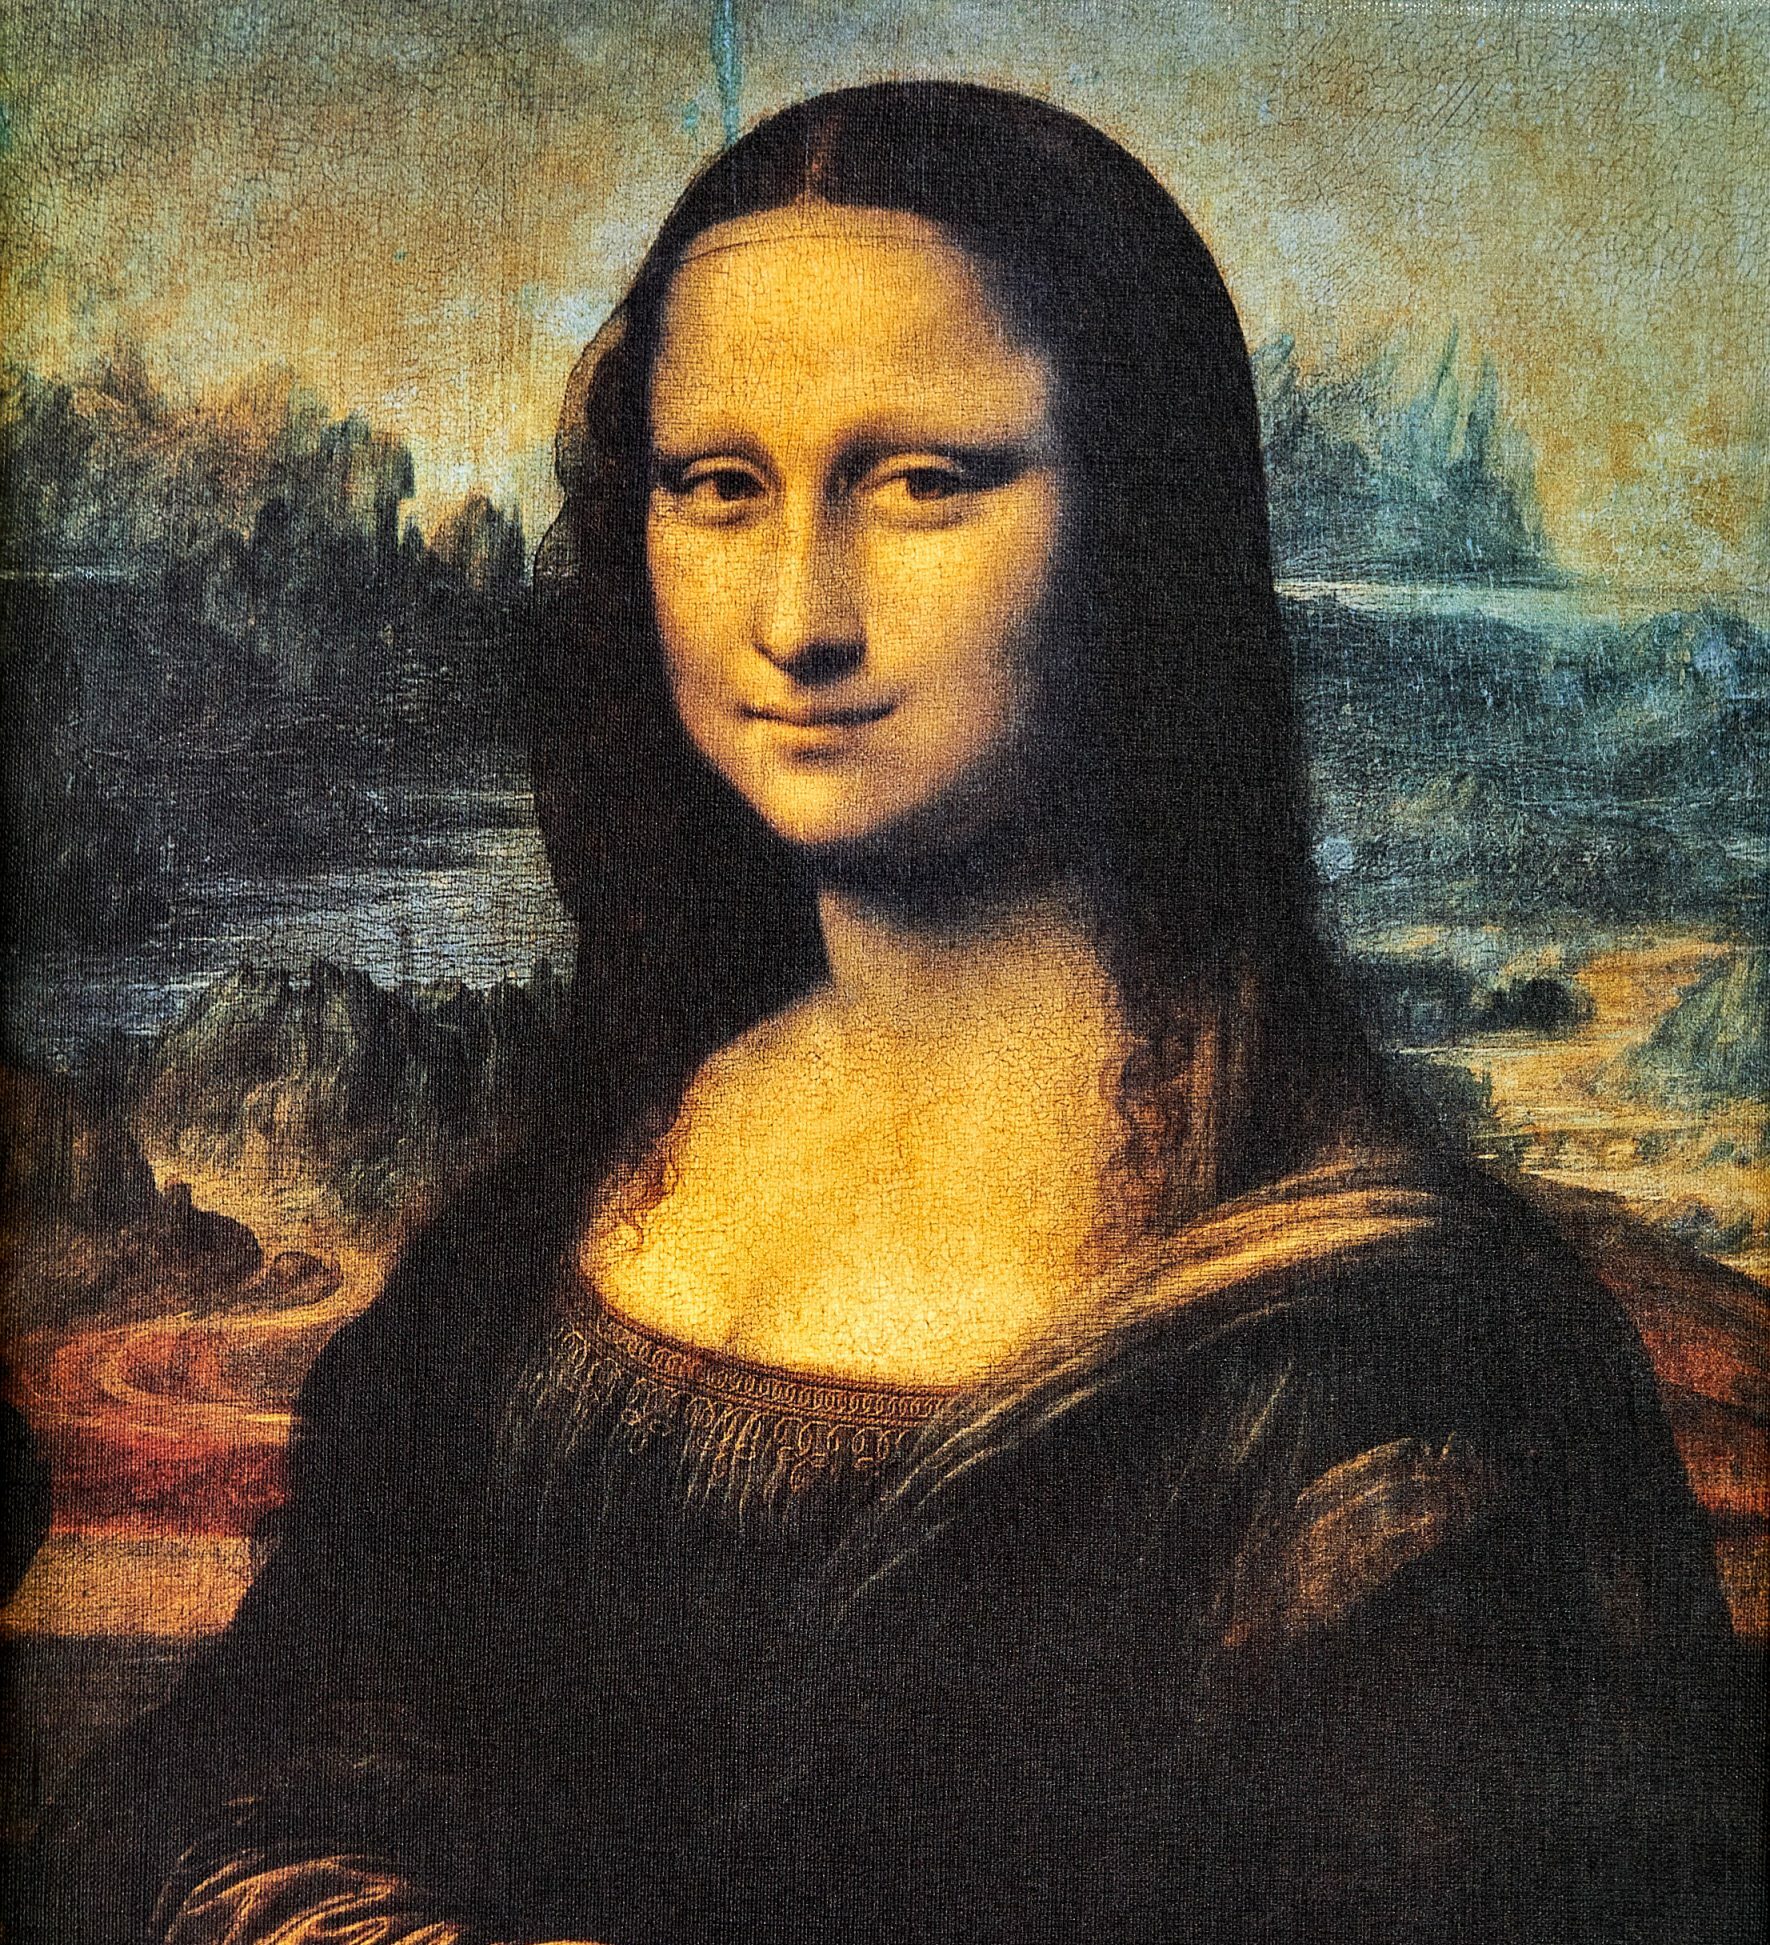 Vinci, Leonardo da Mona Lisa